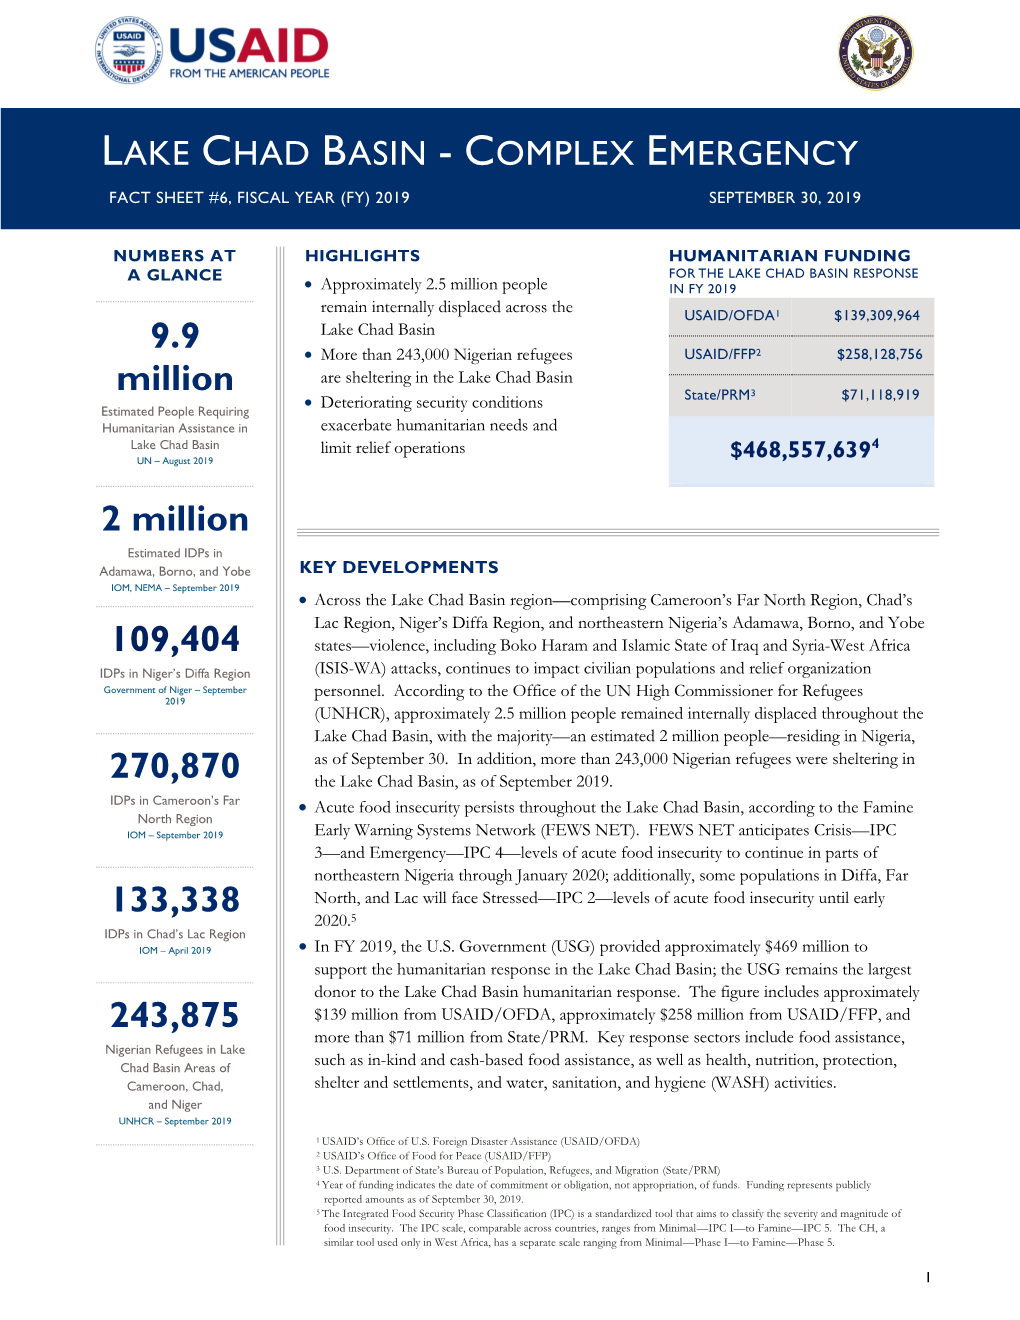 Lake Chad Basin Complex Emergency Fact Sheet #6